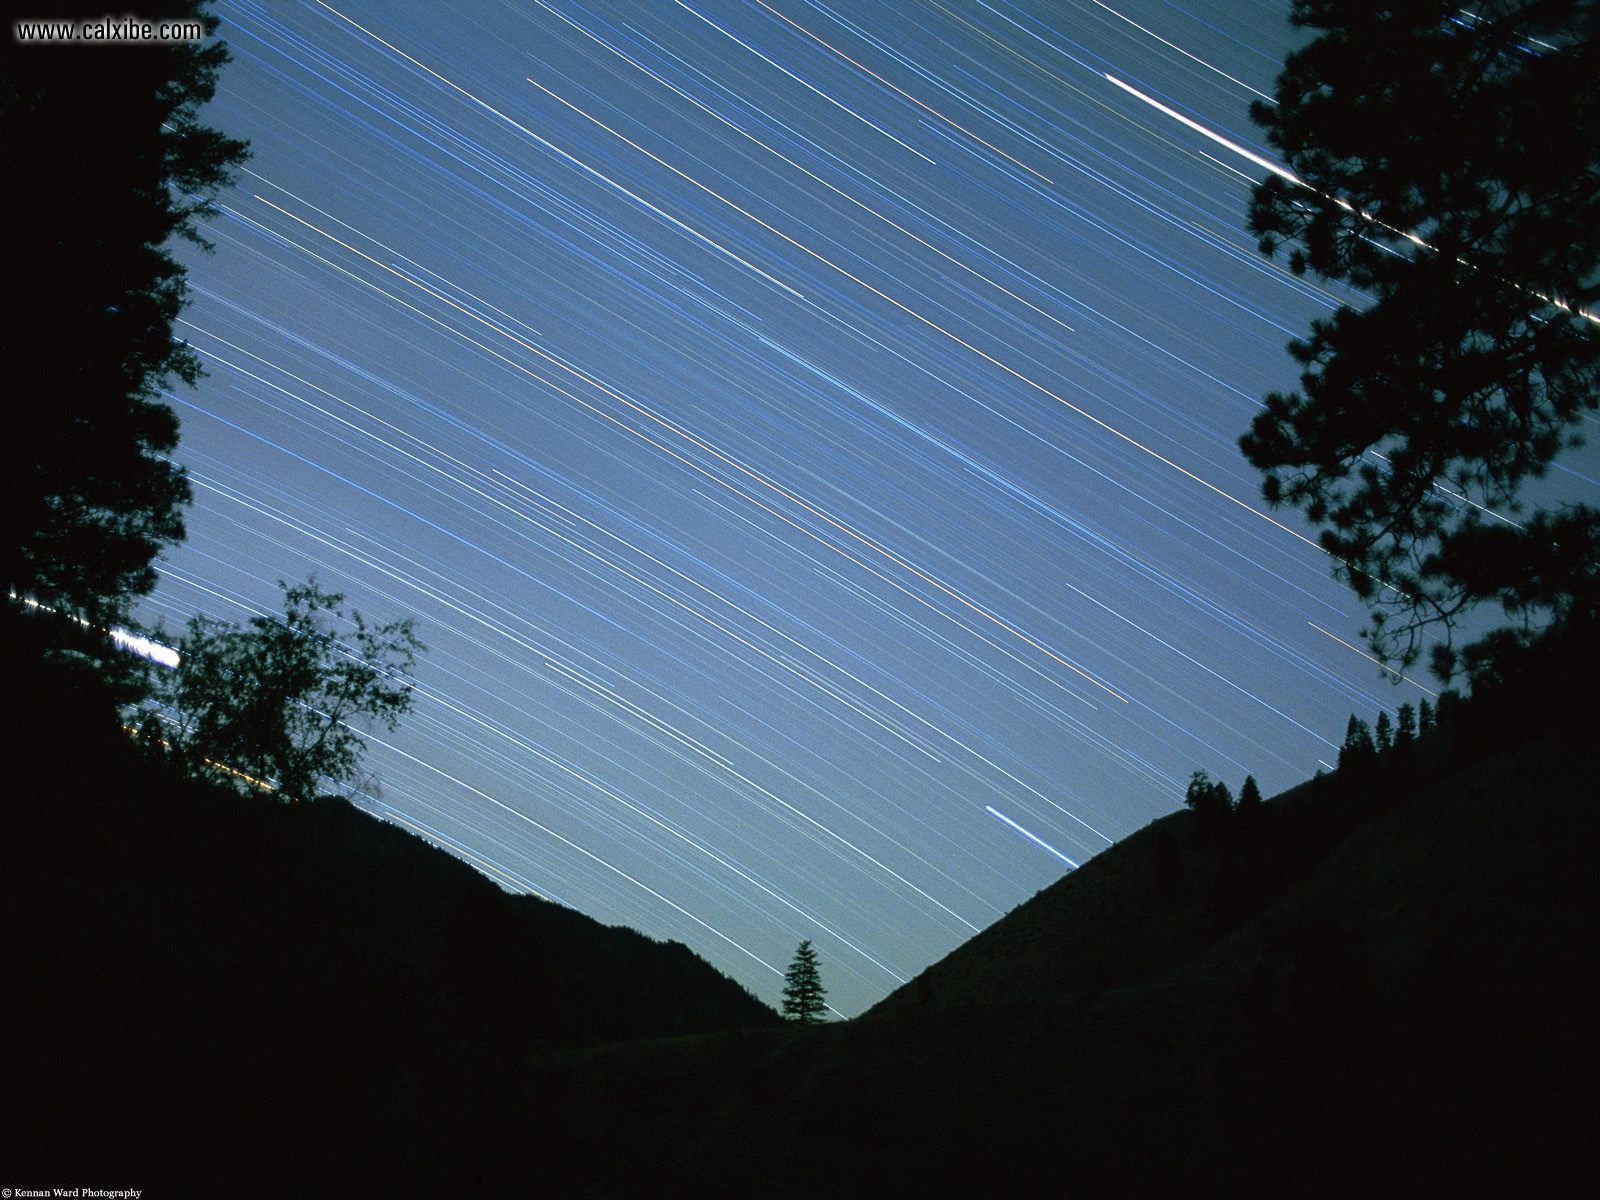 Nature Shooting The Night Sky Alaska picture nr 17622